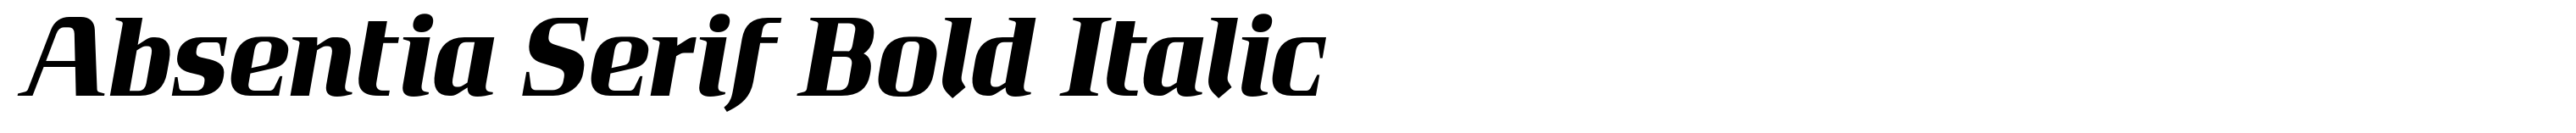 Absentia Serif Bold Italic